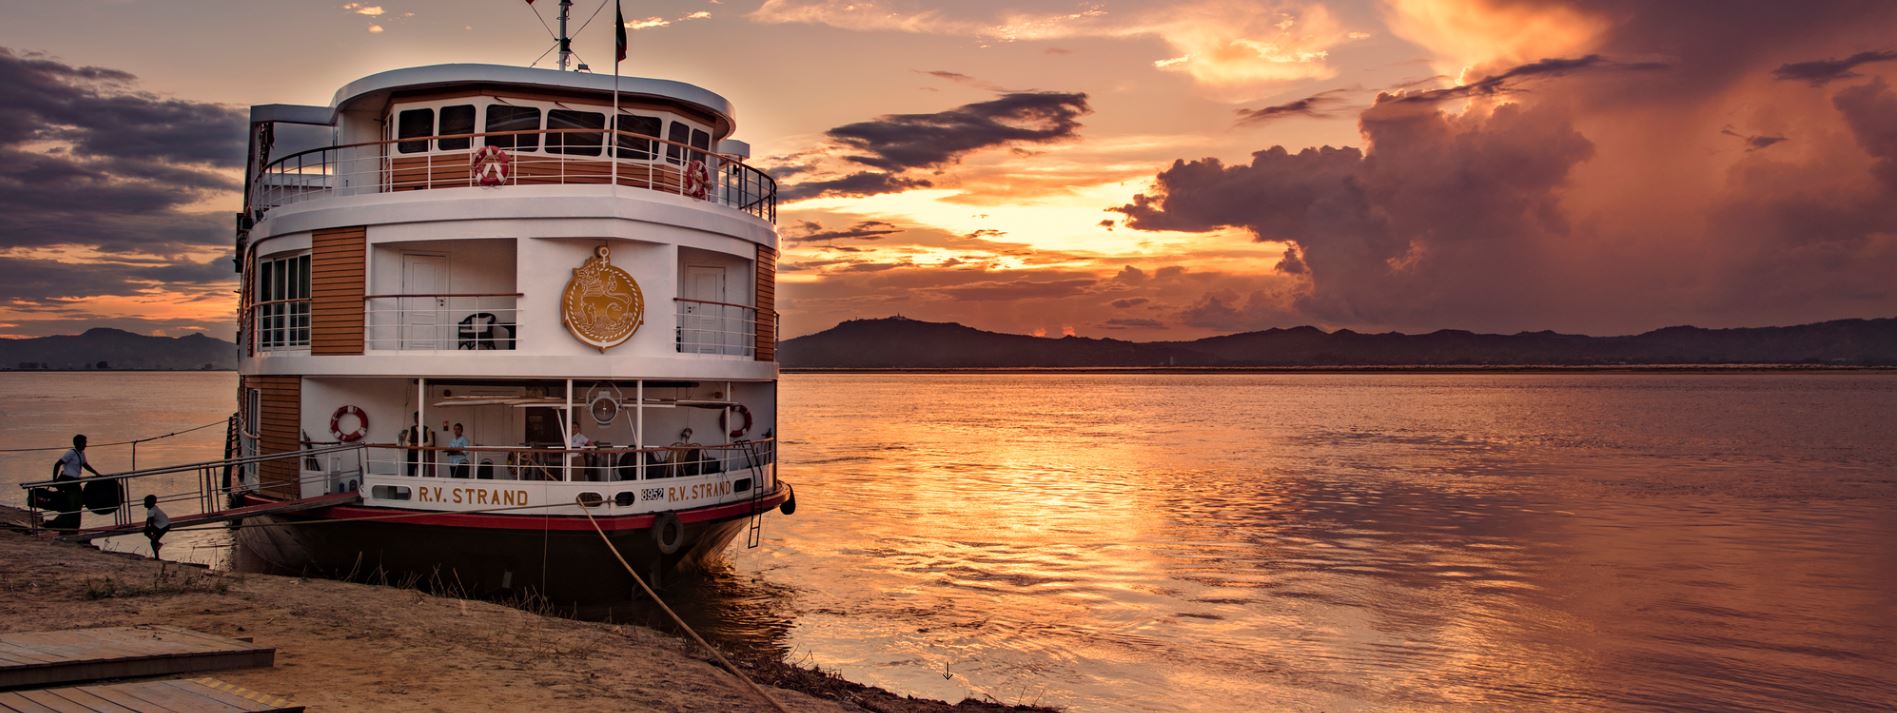 Strand Cruise Myanmar Cruises Burma luxury holidays